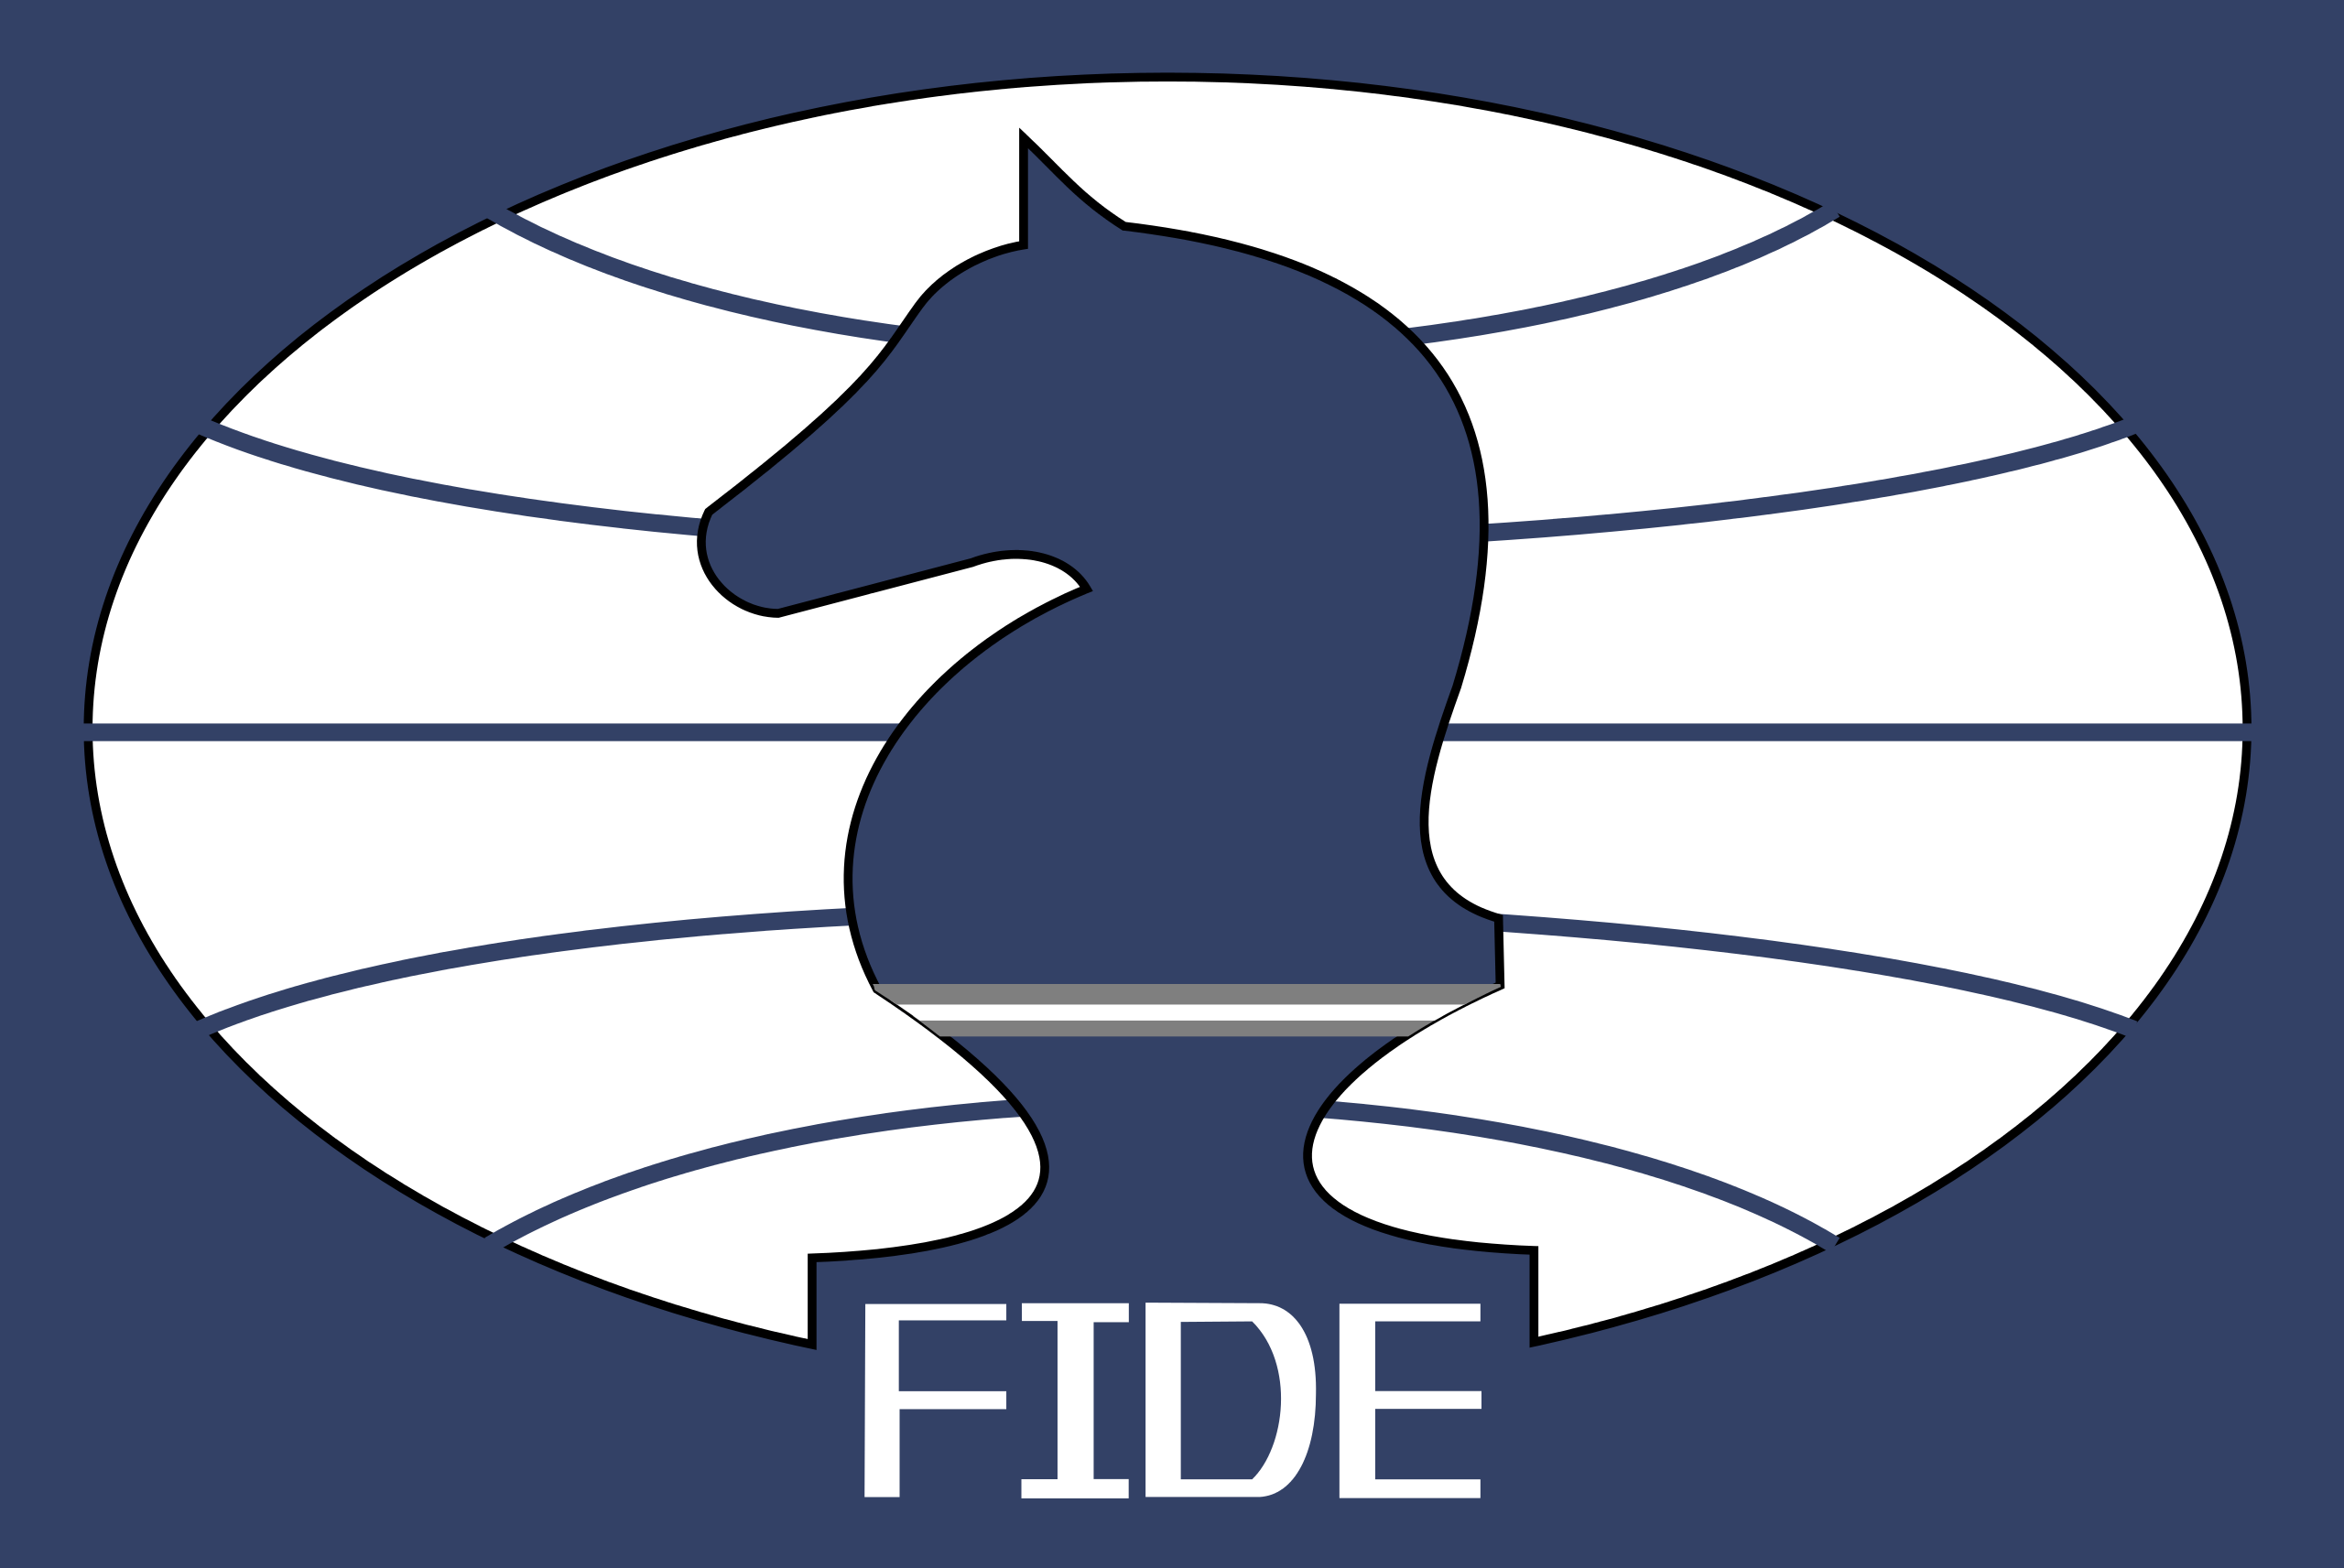 FIDE - International Chess Federation - The winner of the FIDE